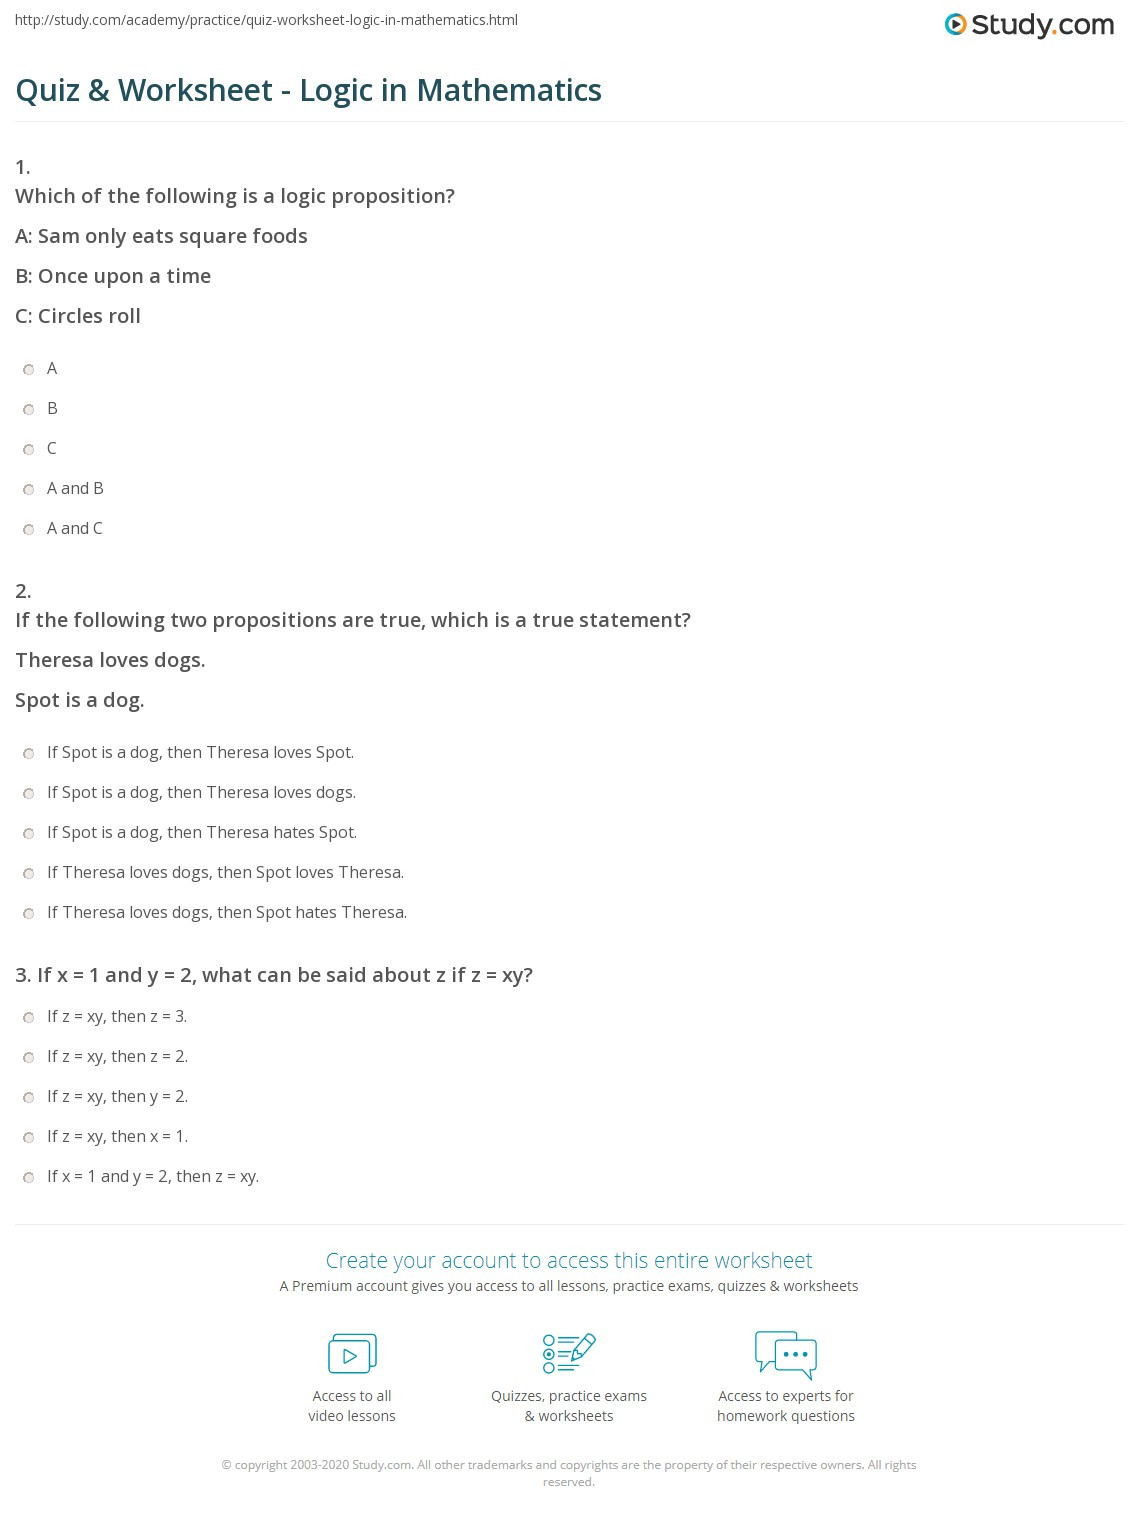 Logical Fallacies Worksheet with Answers Quiz &amp; Worksheet Logic In Mathematics